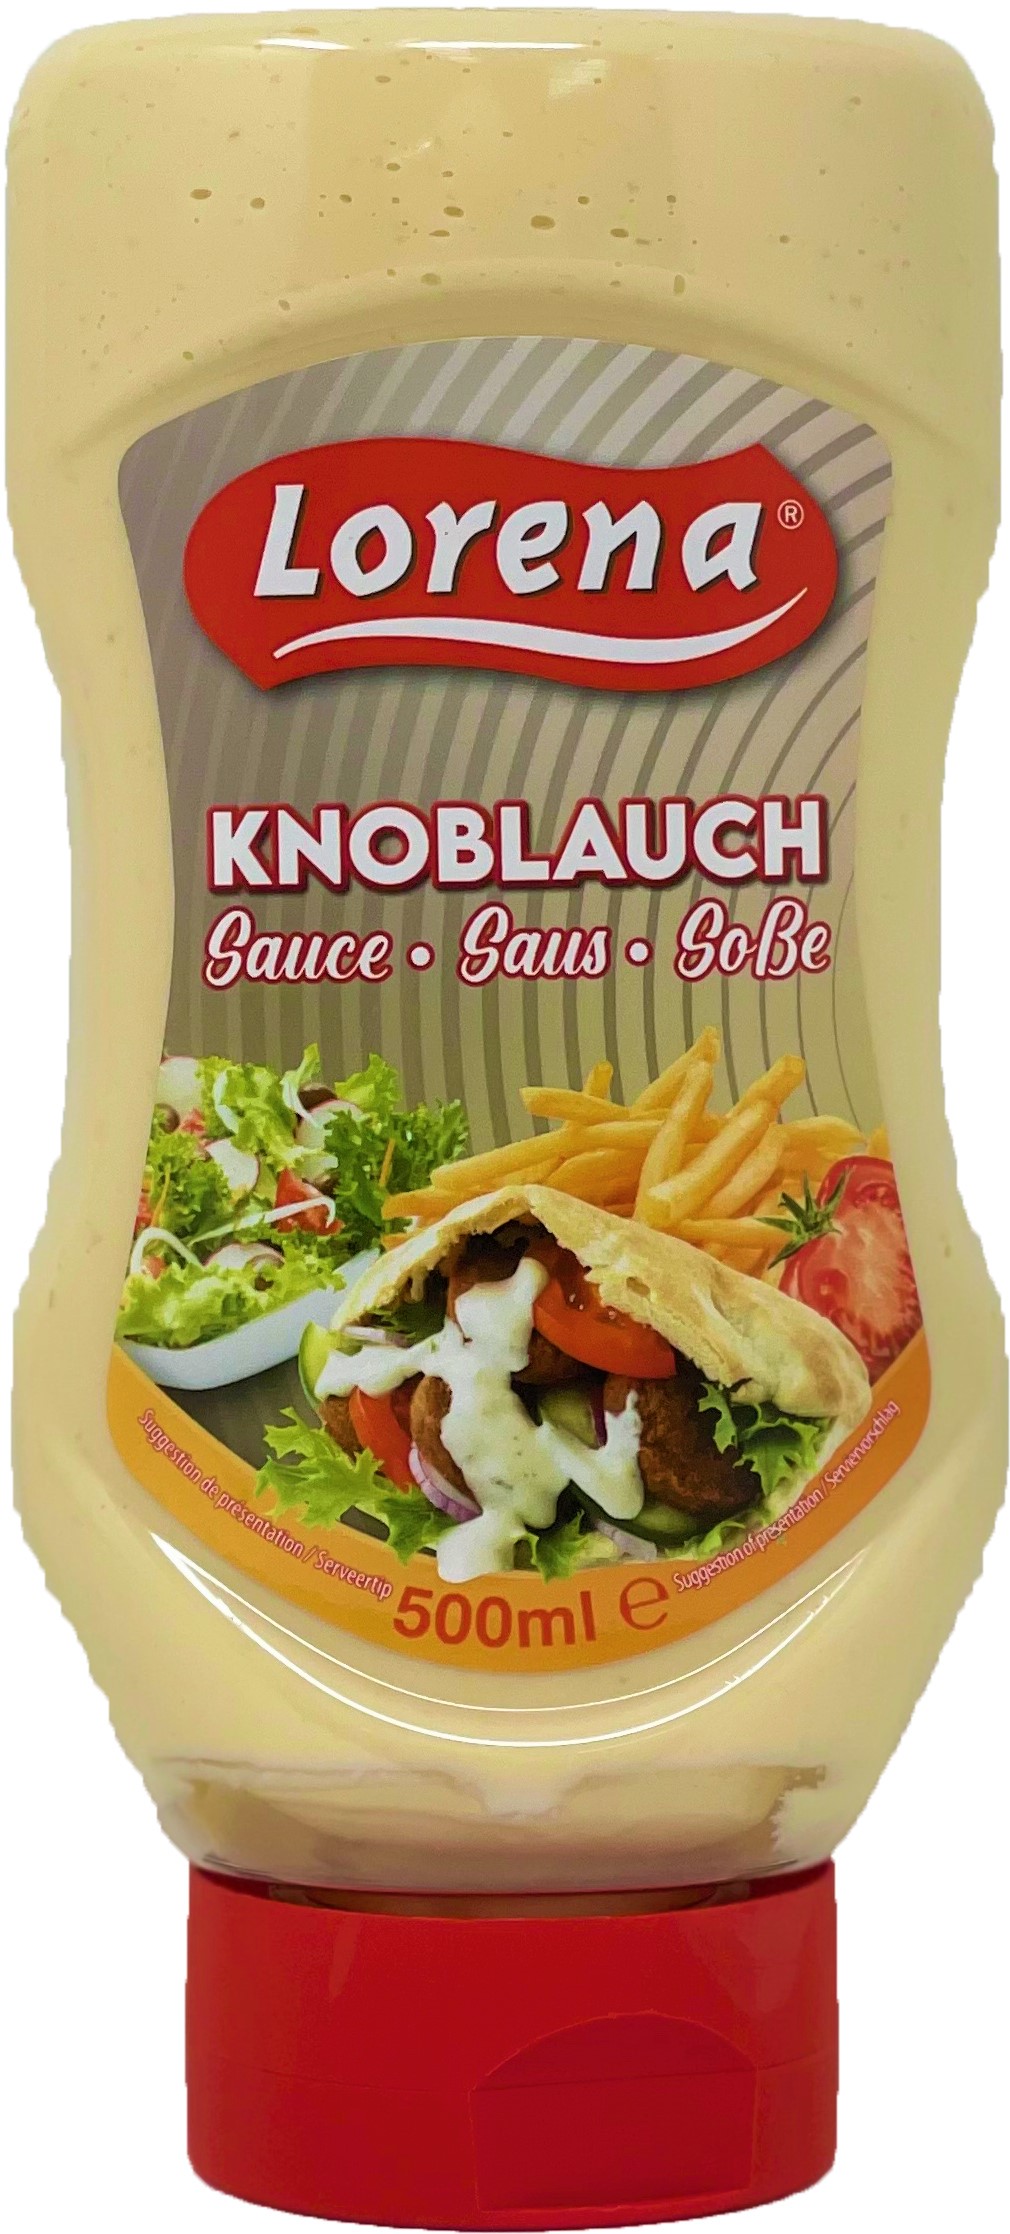 Lorena Knoblauch Sauce 500ml